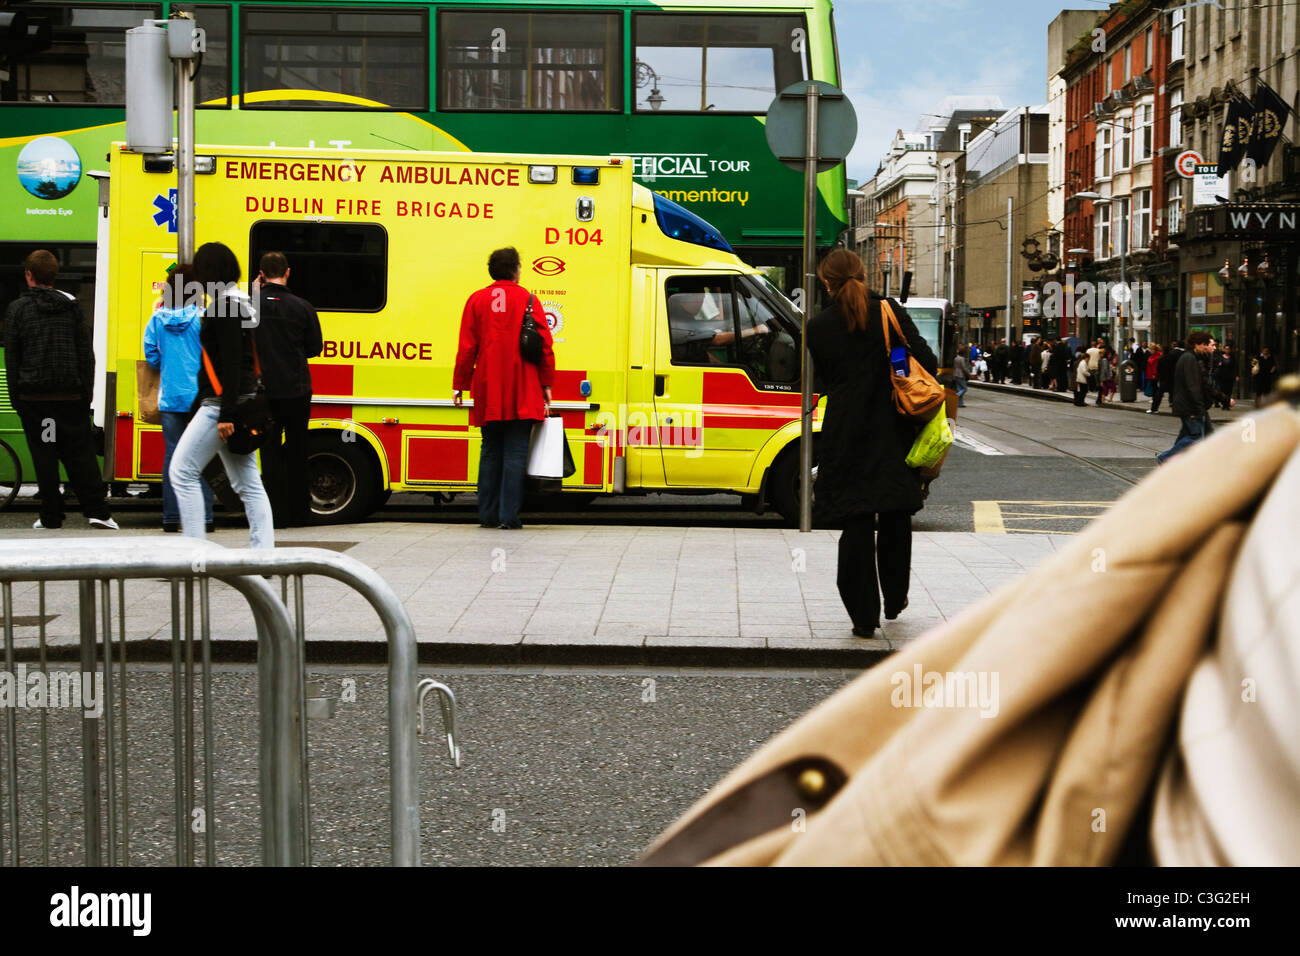 Ambulance on the road in a market, Dublin, Republic of Ireland Stock Photo